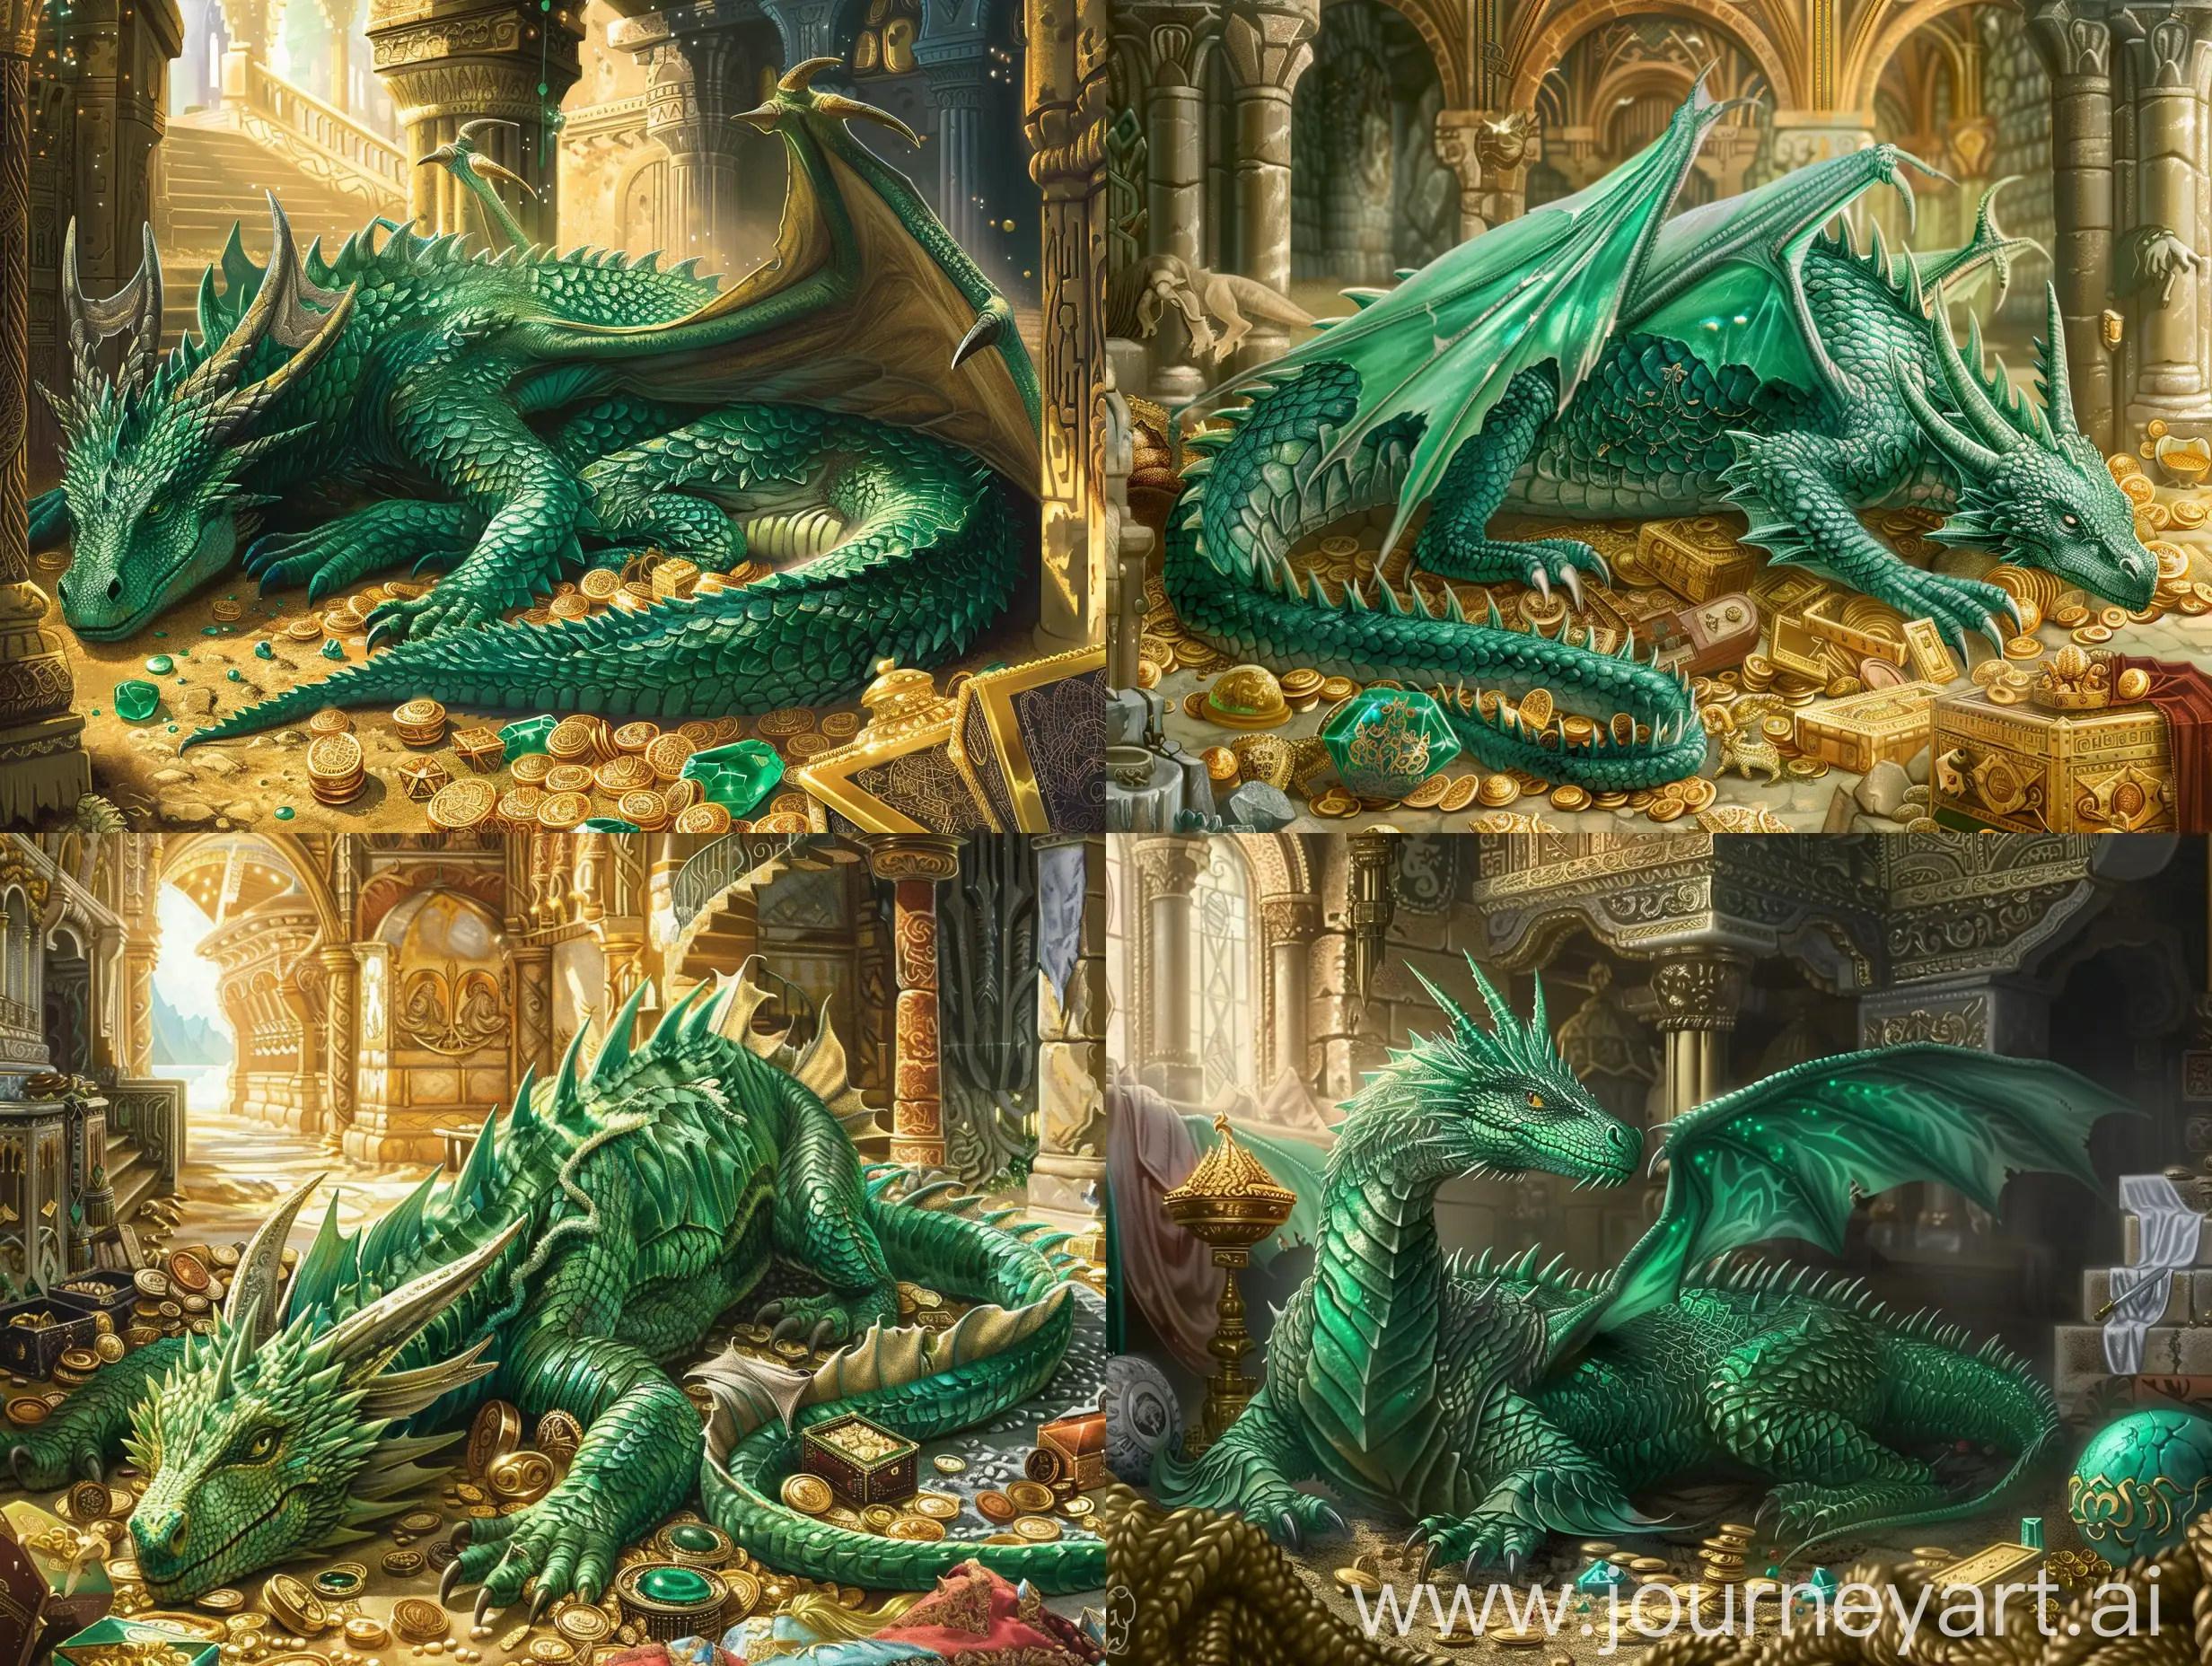 Majestic-Emerald-Dragon-Resting-in-TreasureFilled-Palace